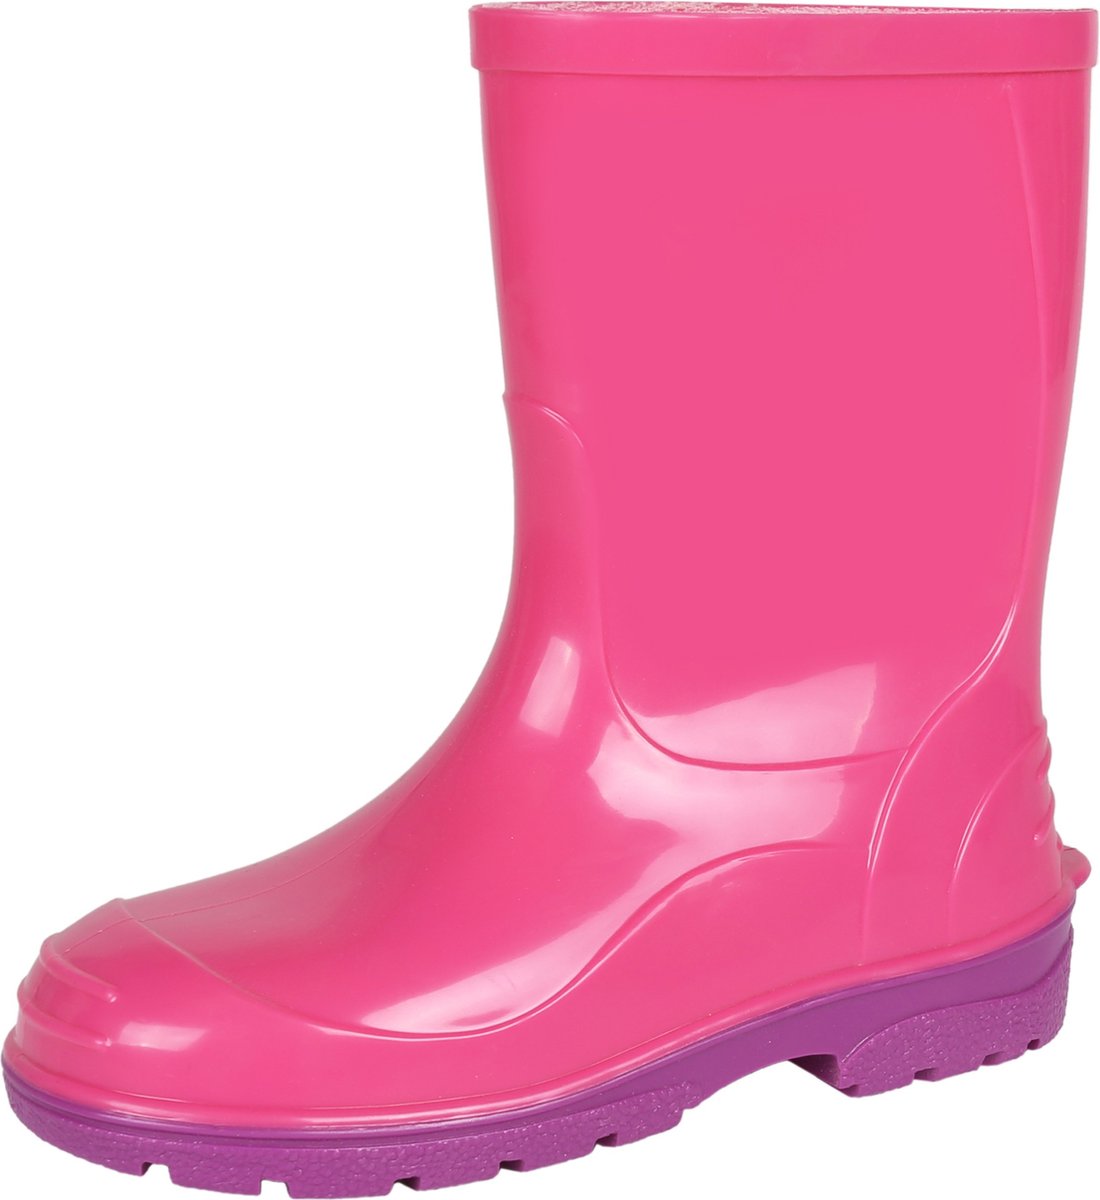 Roze laarzen met paarse zool - Ola LEMIGO / 25